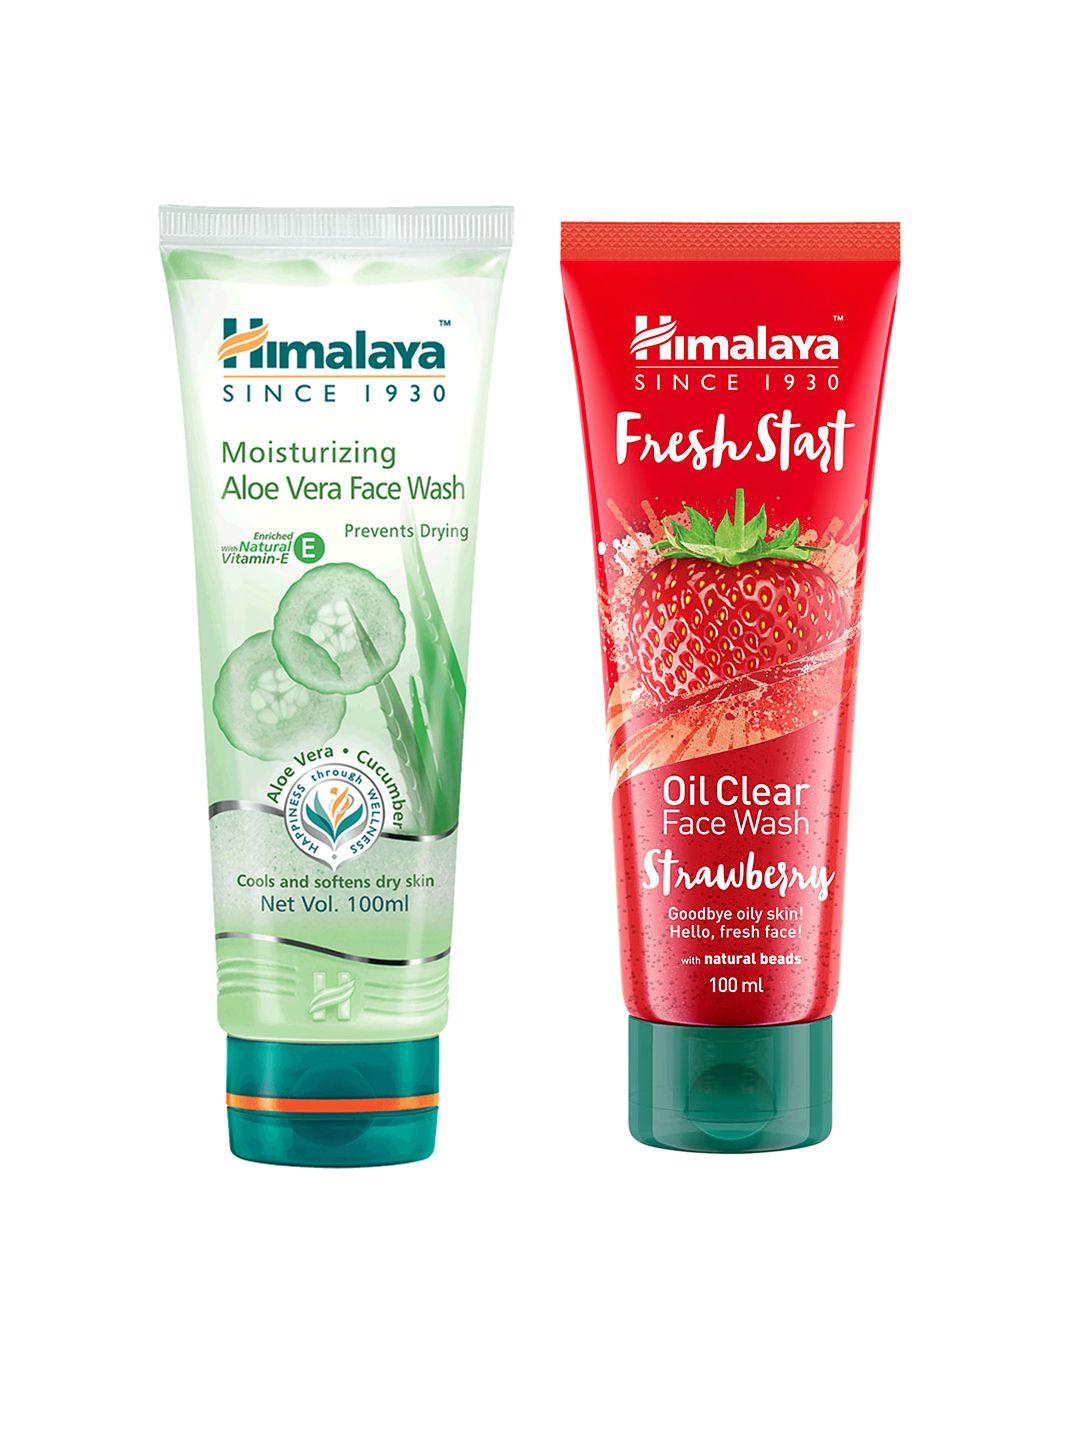 himalaya set of 2 face wash - fresh start oil clear strawberry & moisturizing aloe vera